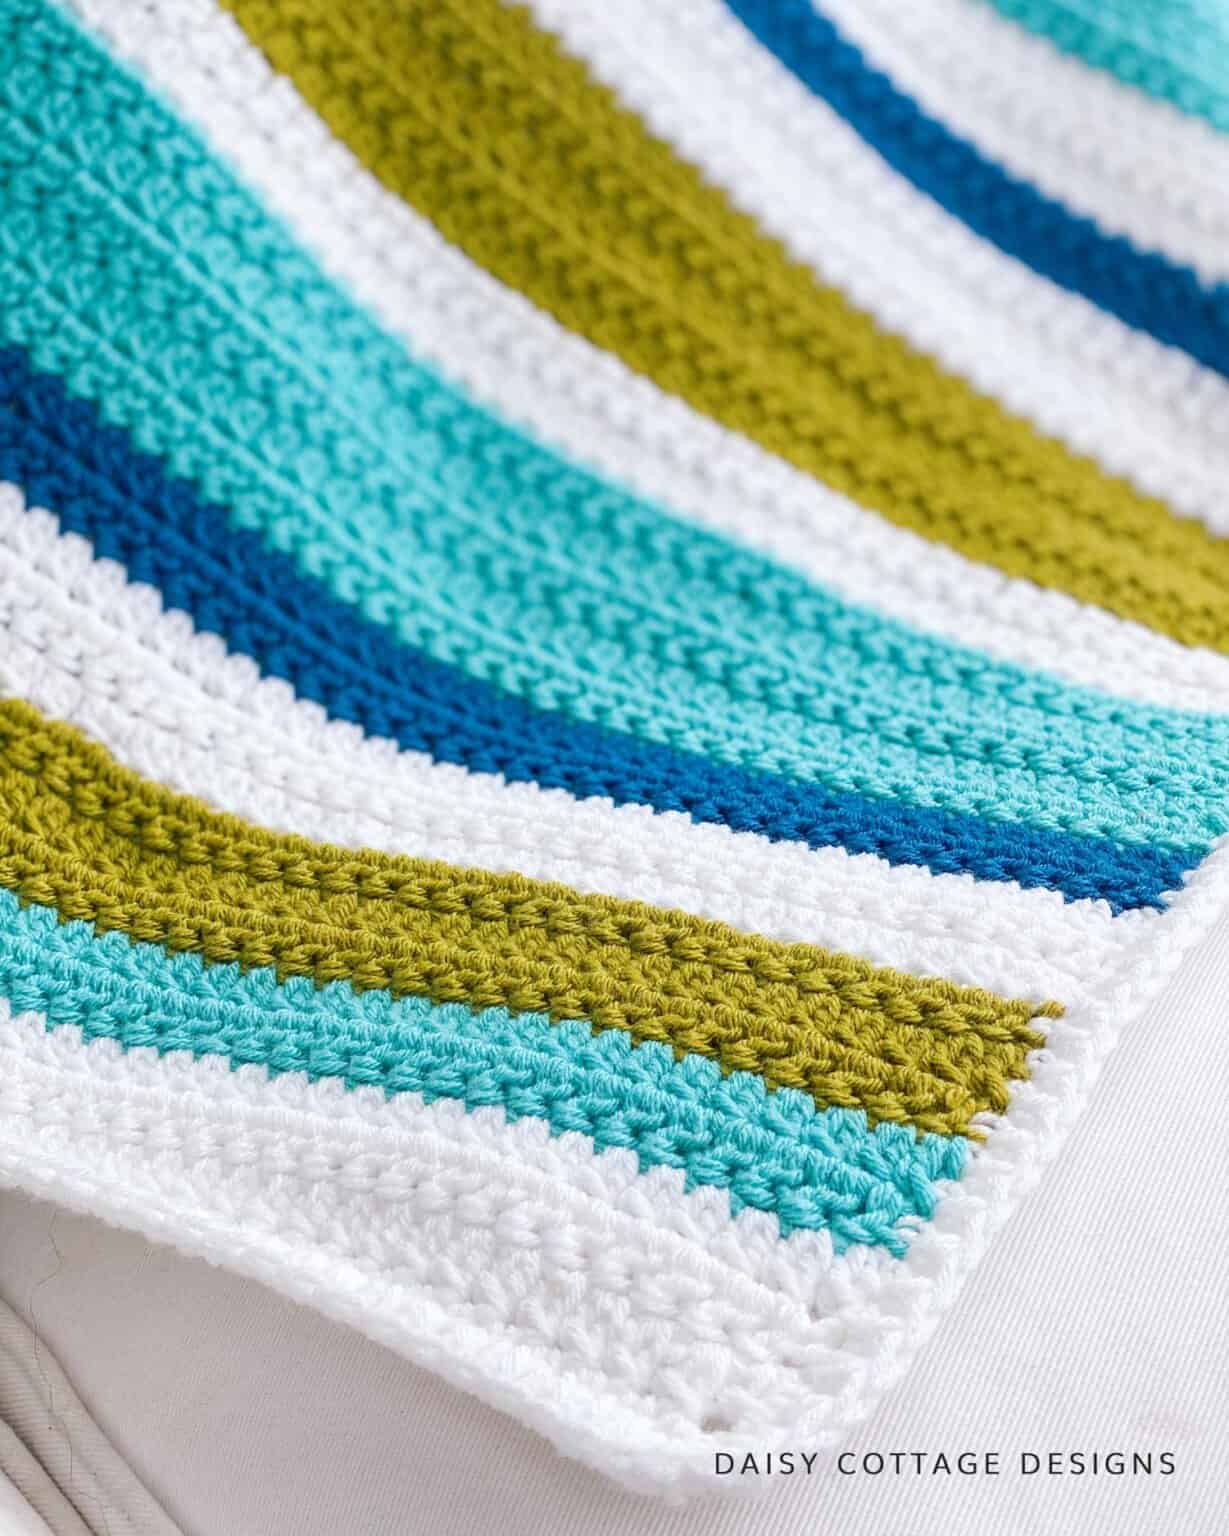 Textured Crochet Stitch Blanket: The Oceanside Throw - Daisy Cottage